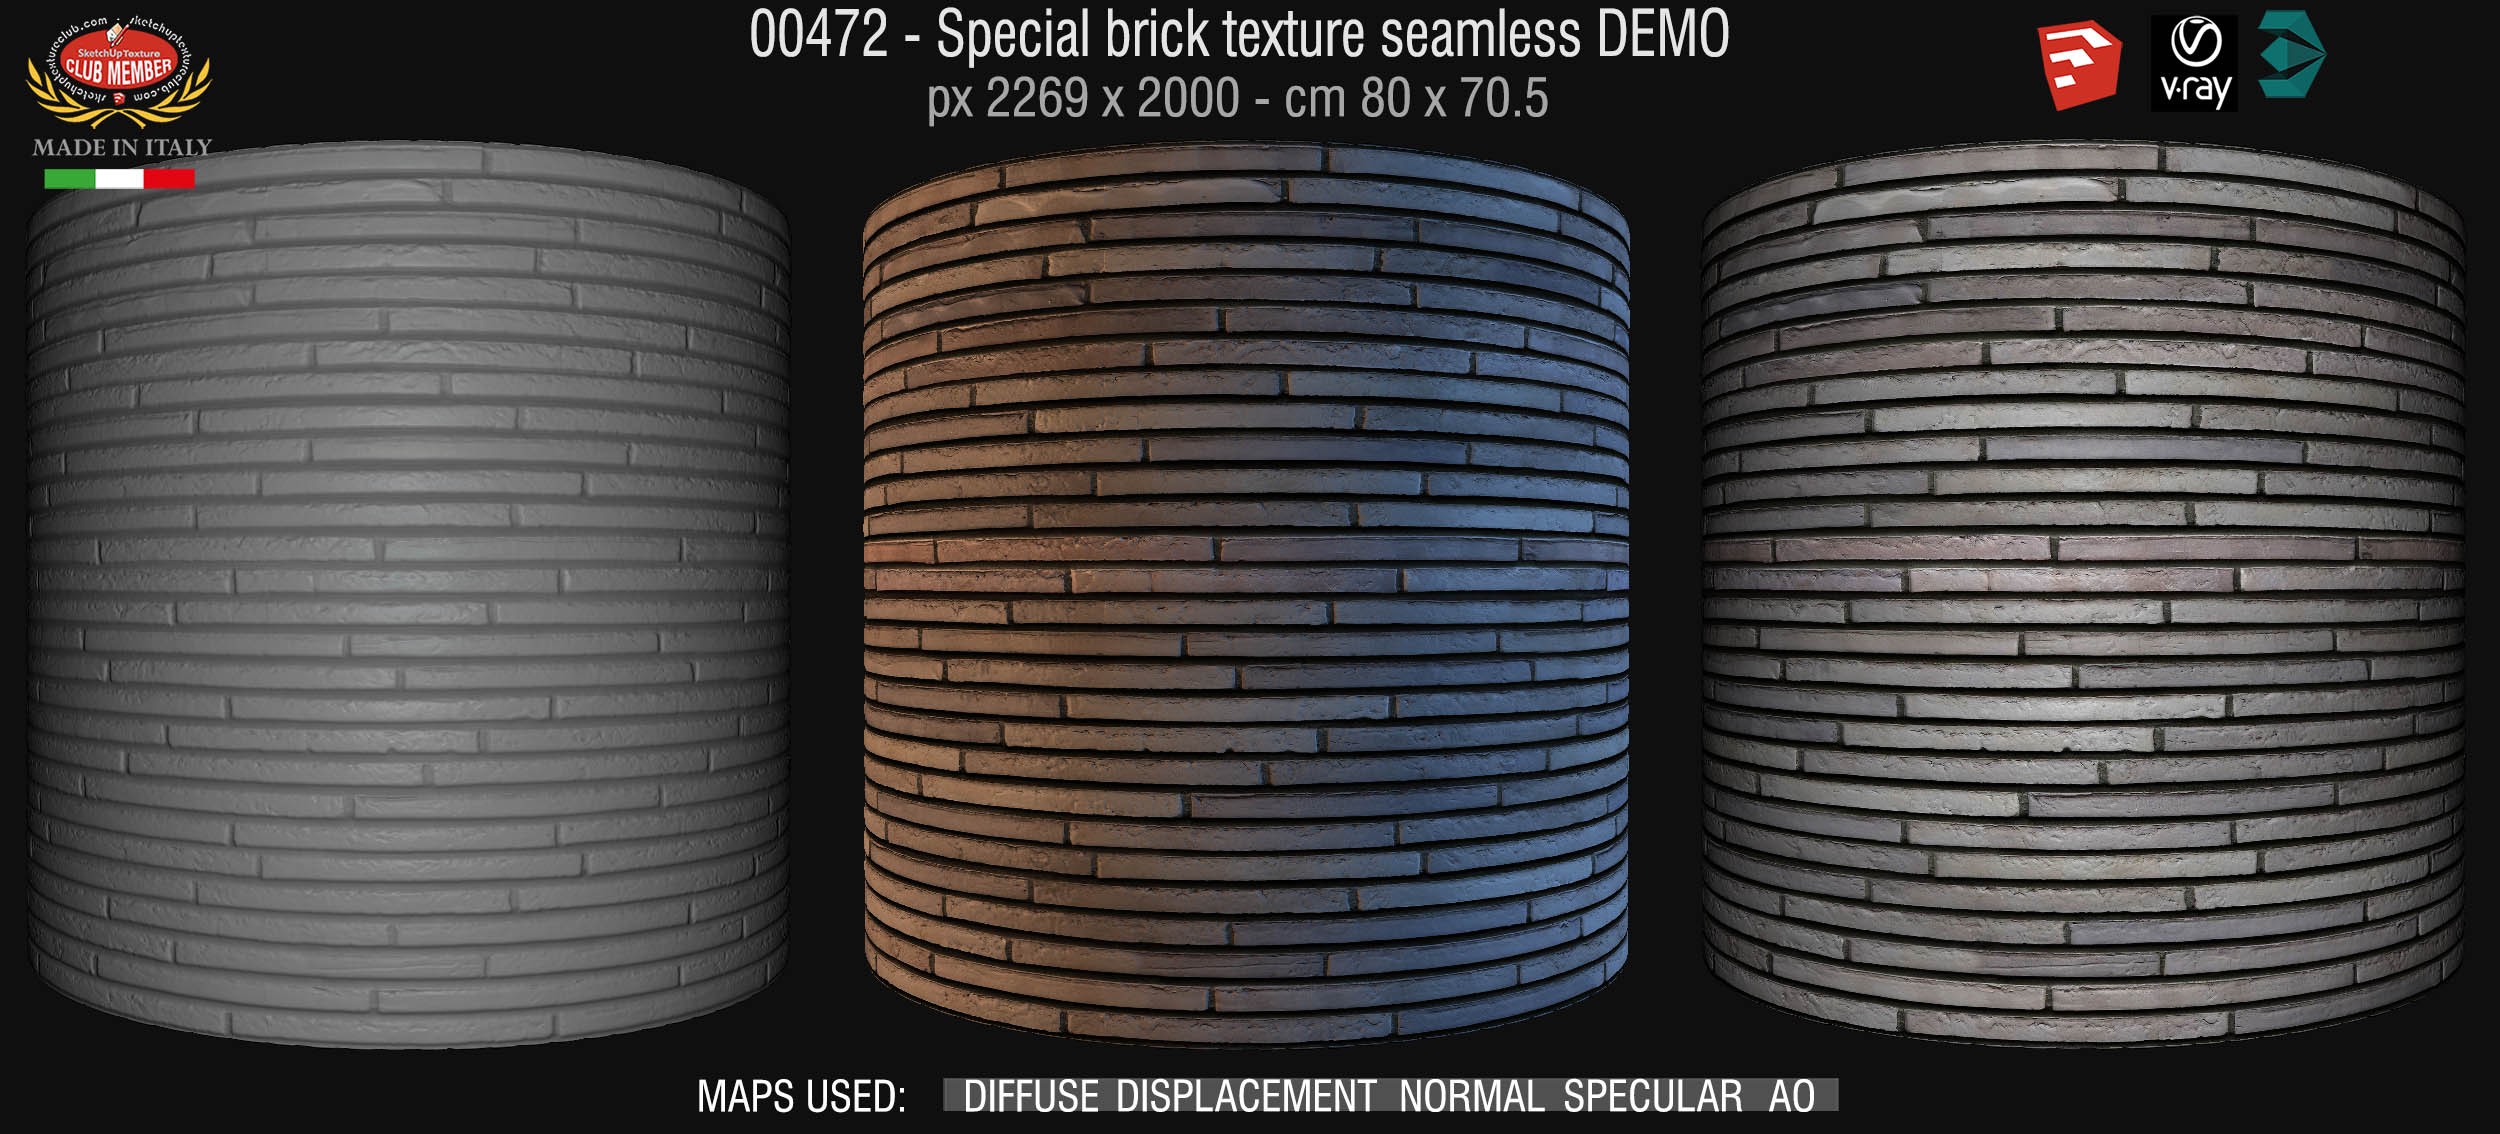 00472 Special brick texture seamless + maps DEMO